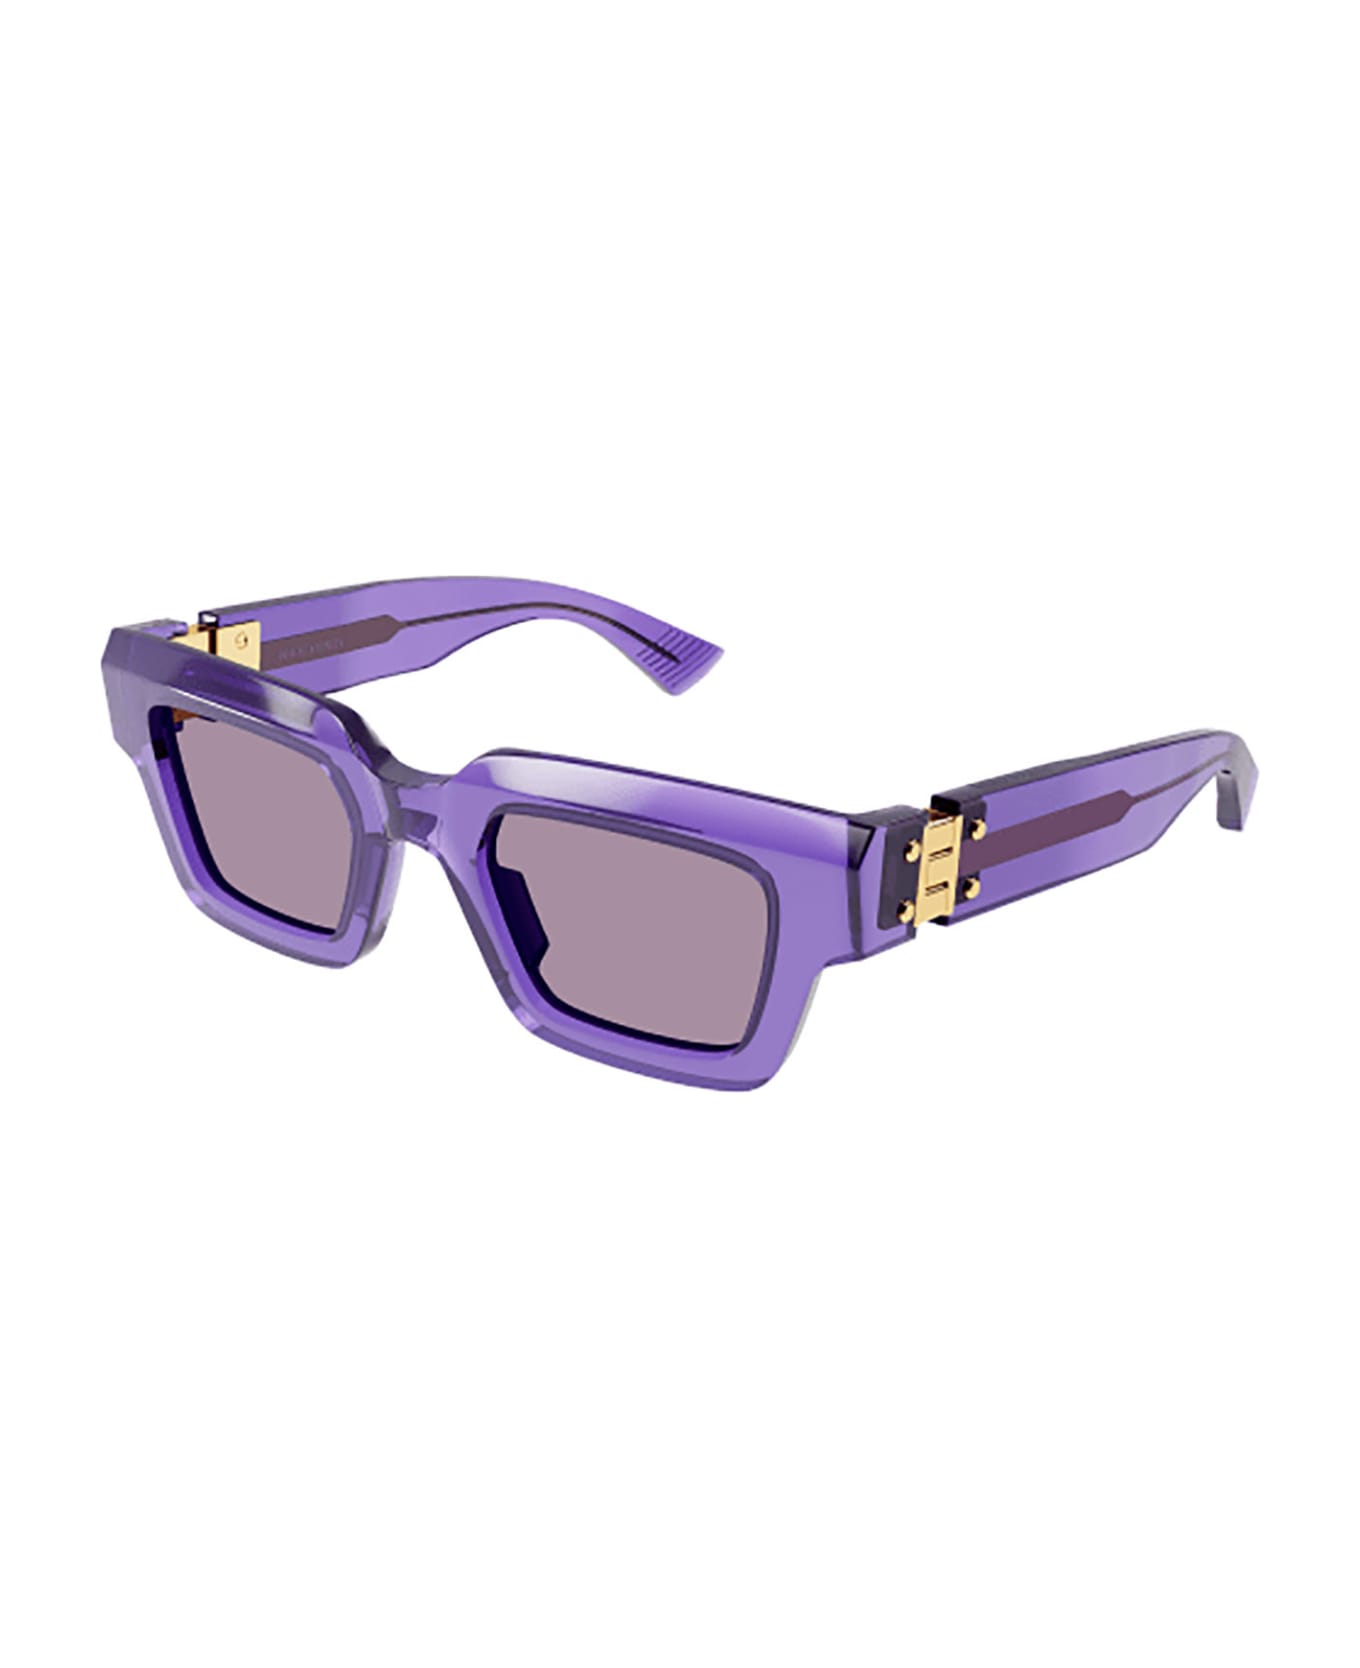 Bottega Veneta Eyewear 1g7r4ni0a - 003 Gucci Eyewear GG0767S001 aviator-frame sunglasses